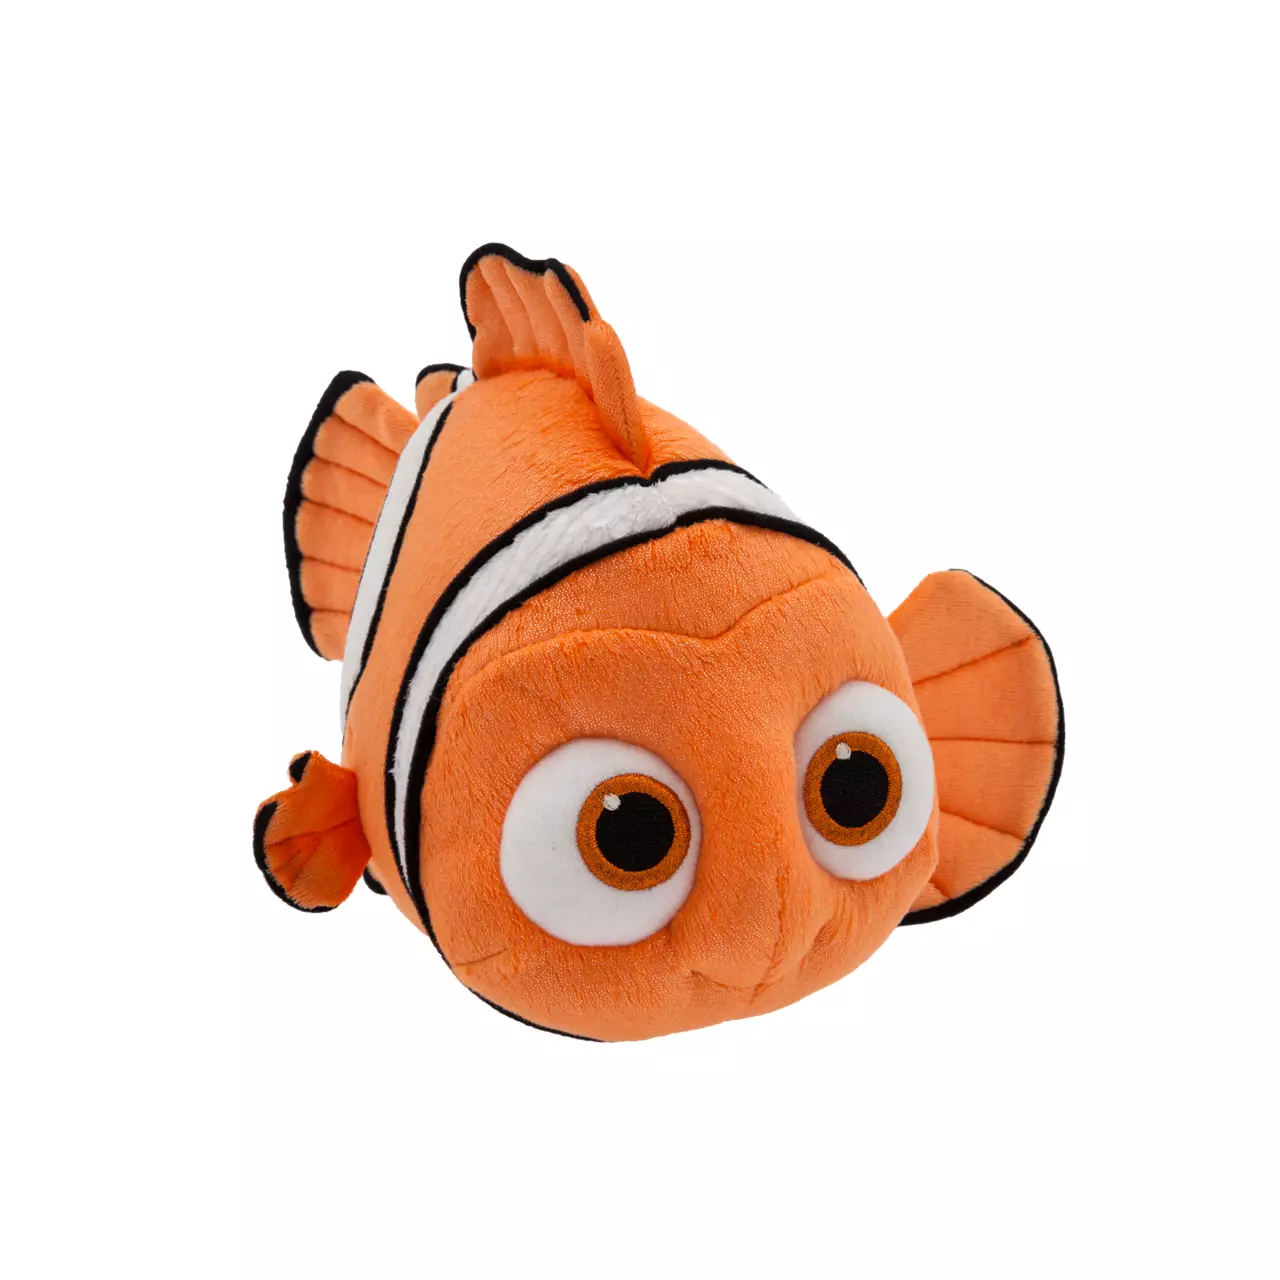 Nemo Plush – Finding Nemo